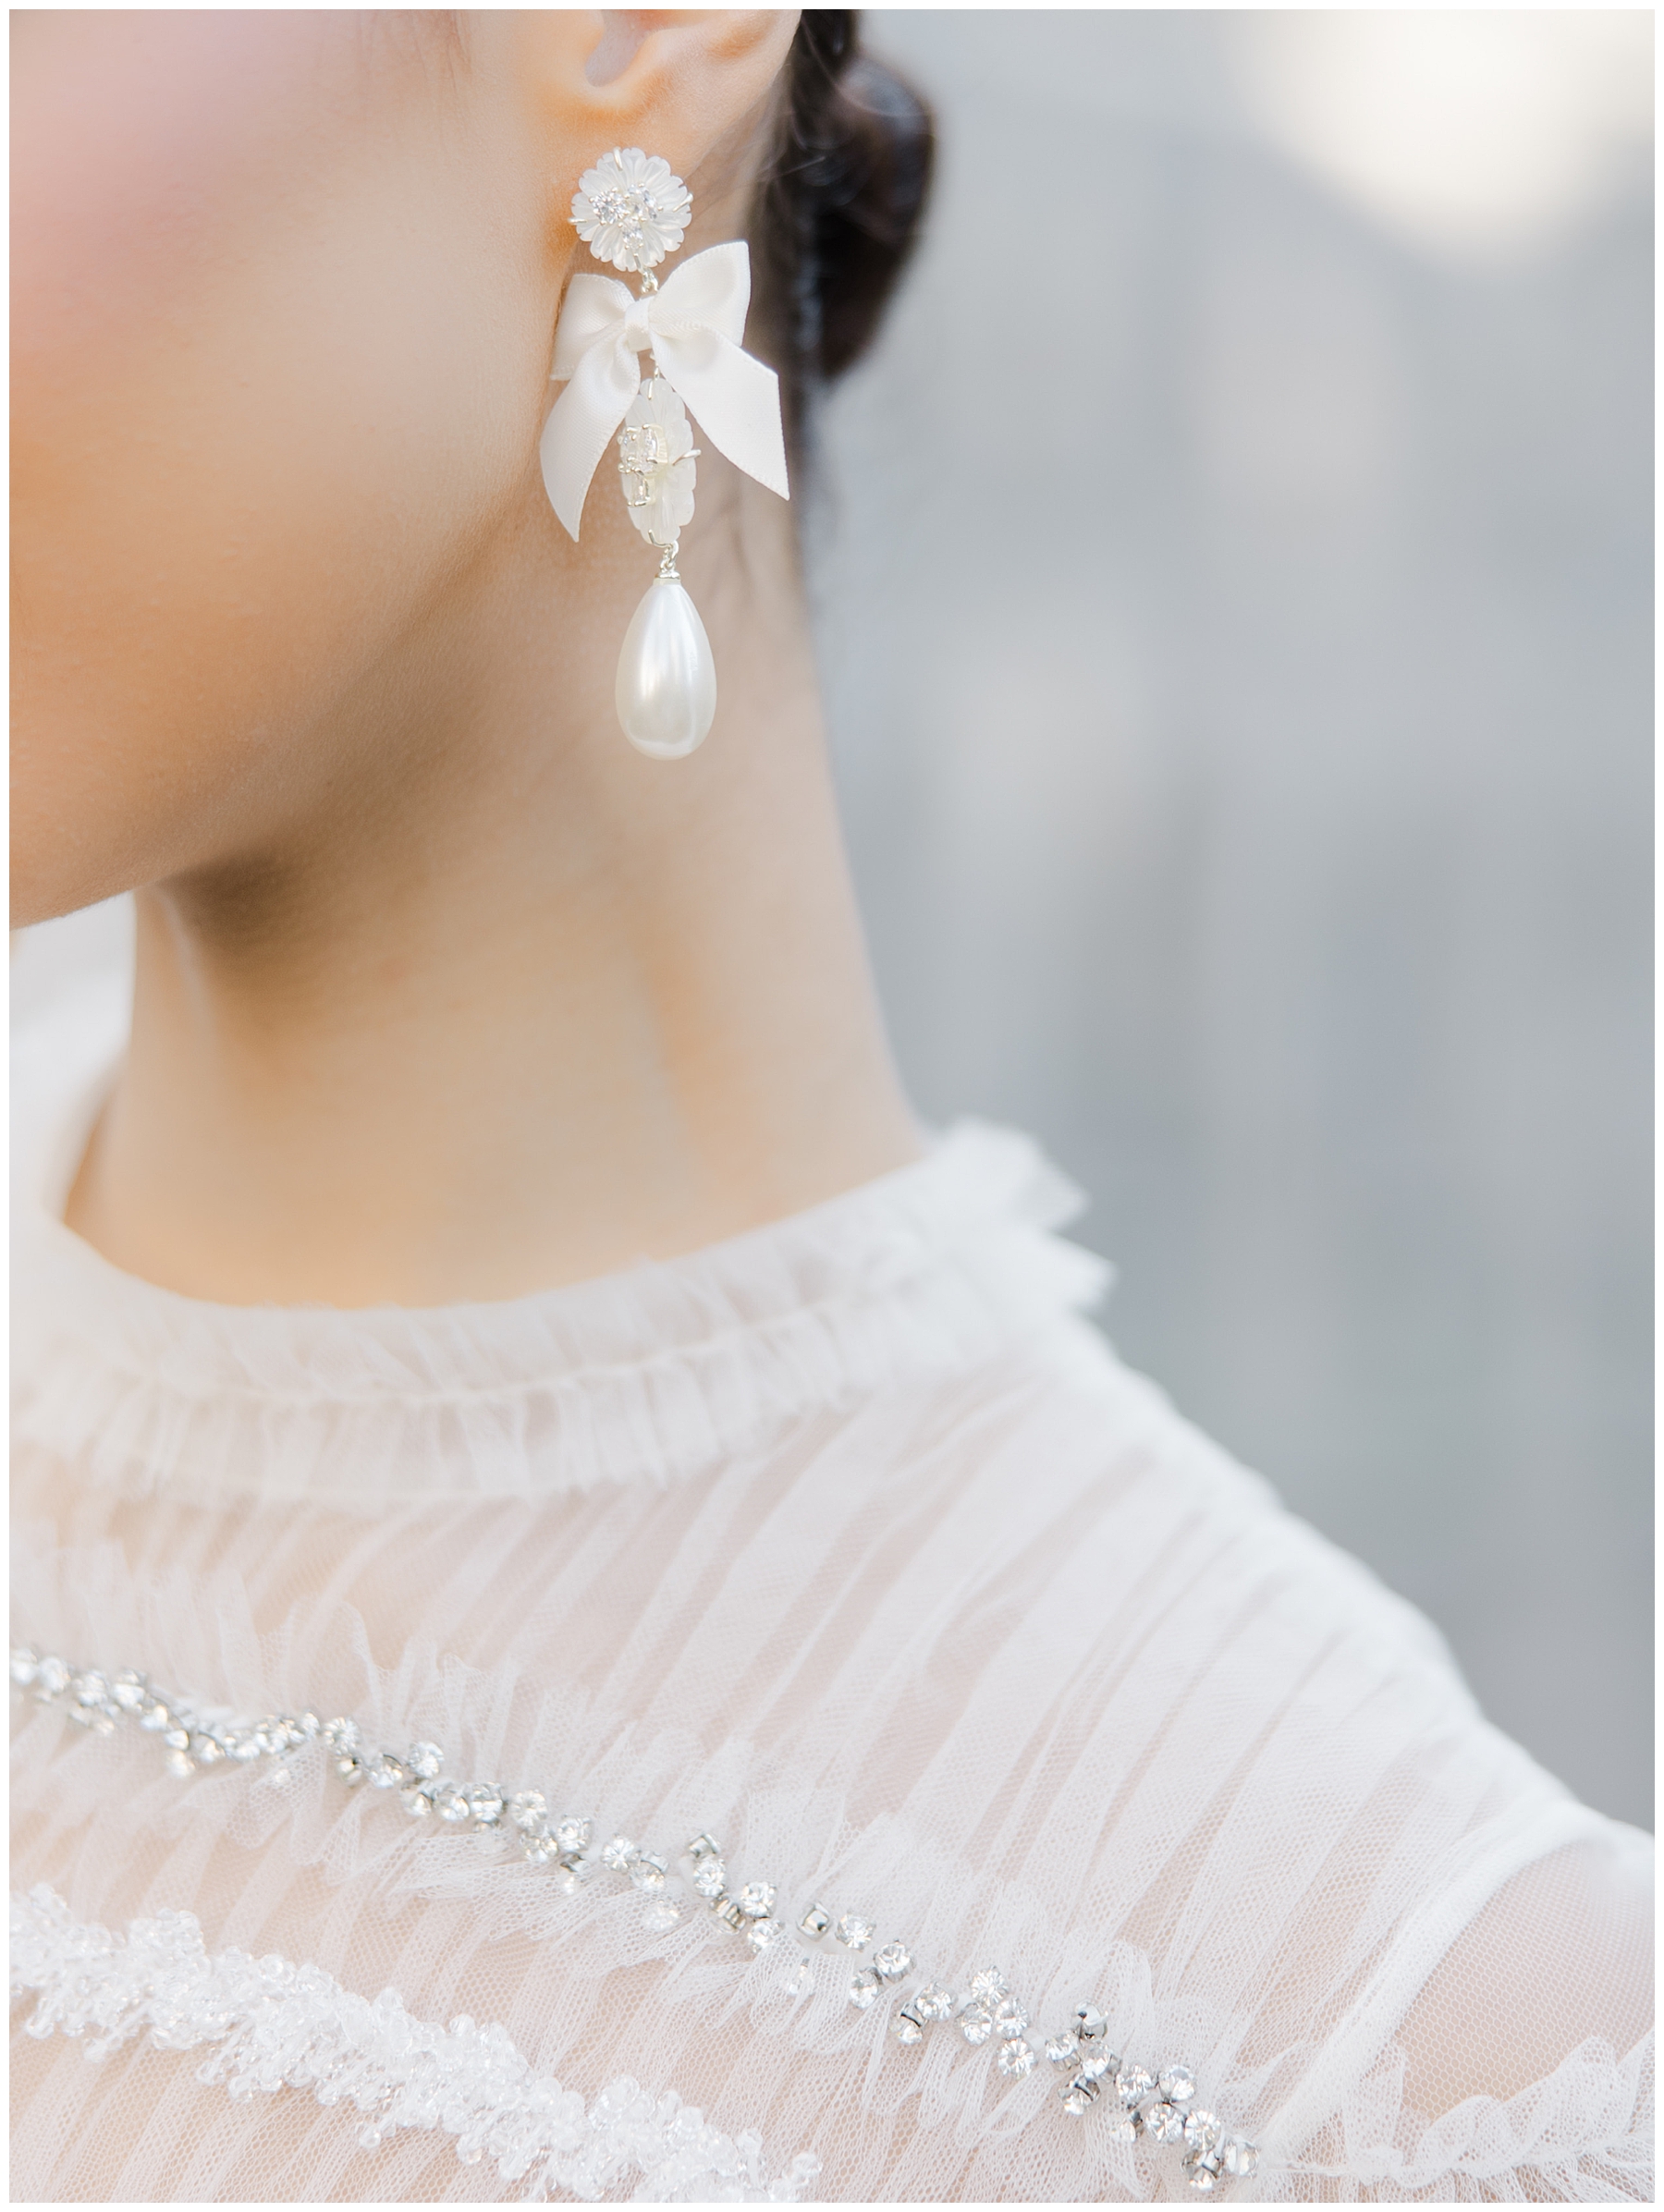 bride's earrings and detail of bride's wedding dress neckline 